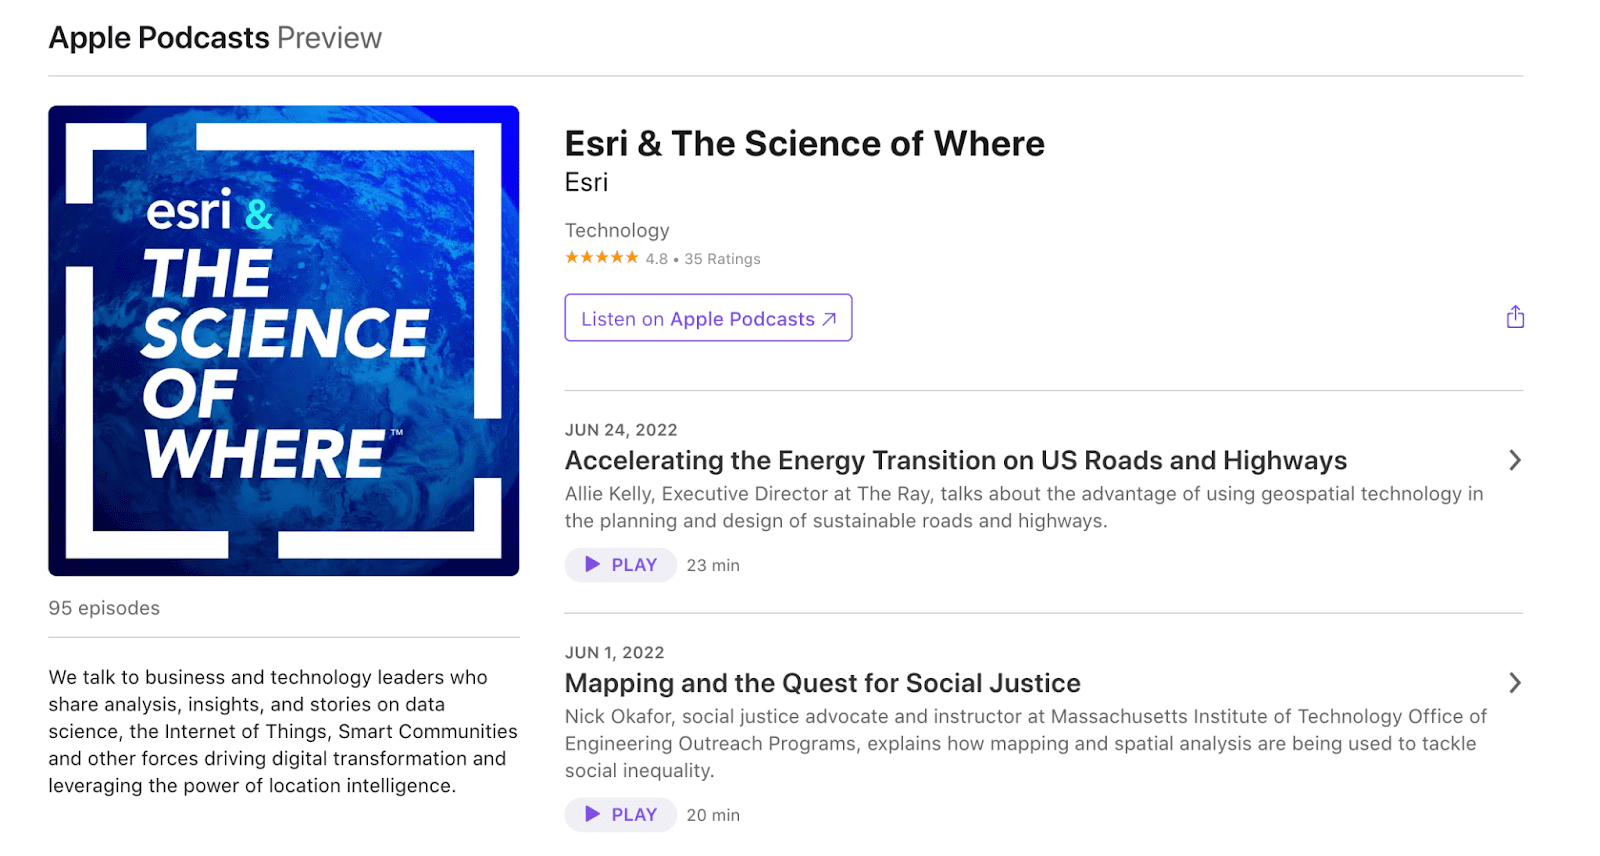 Esri & The Science of Where